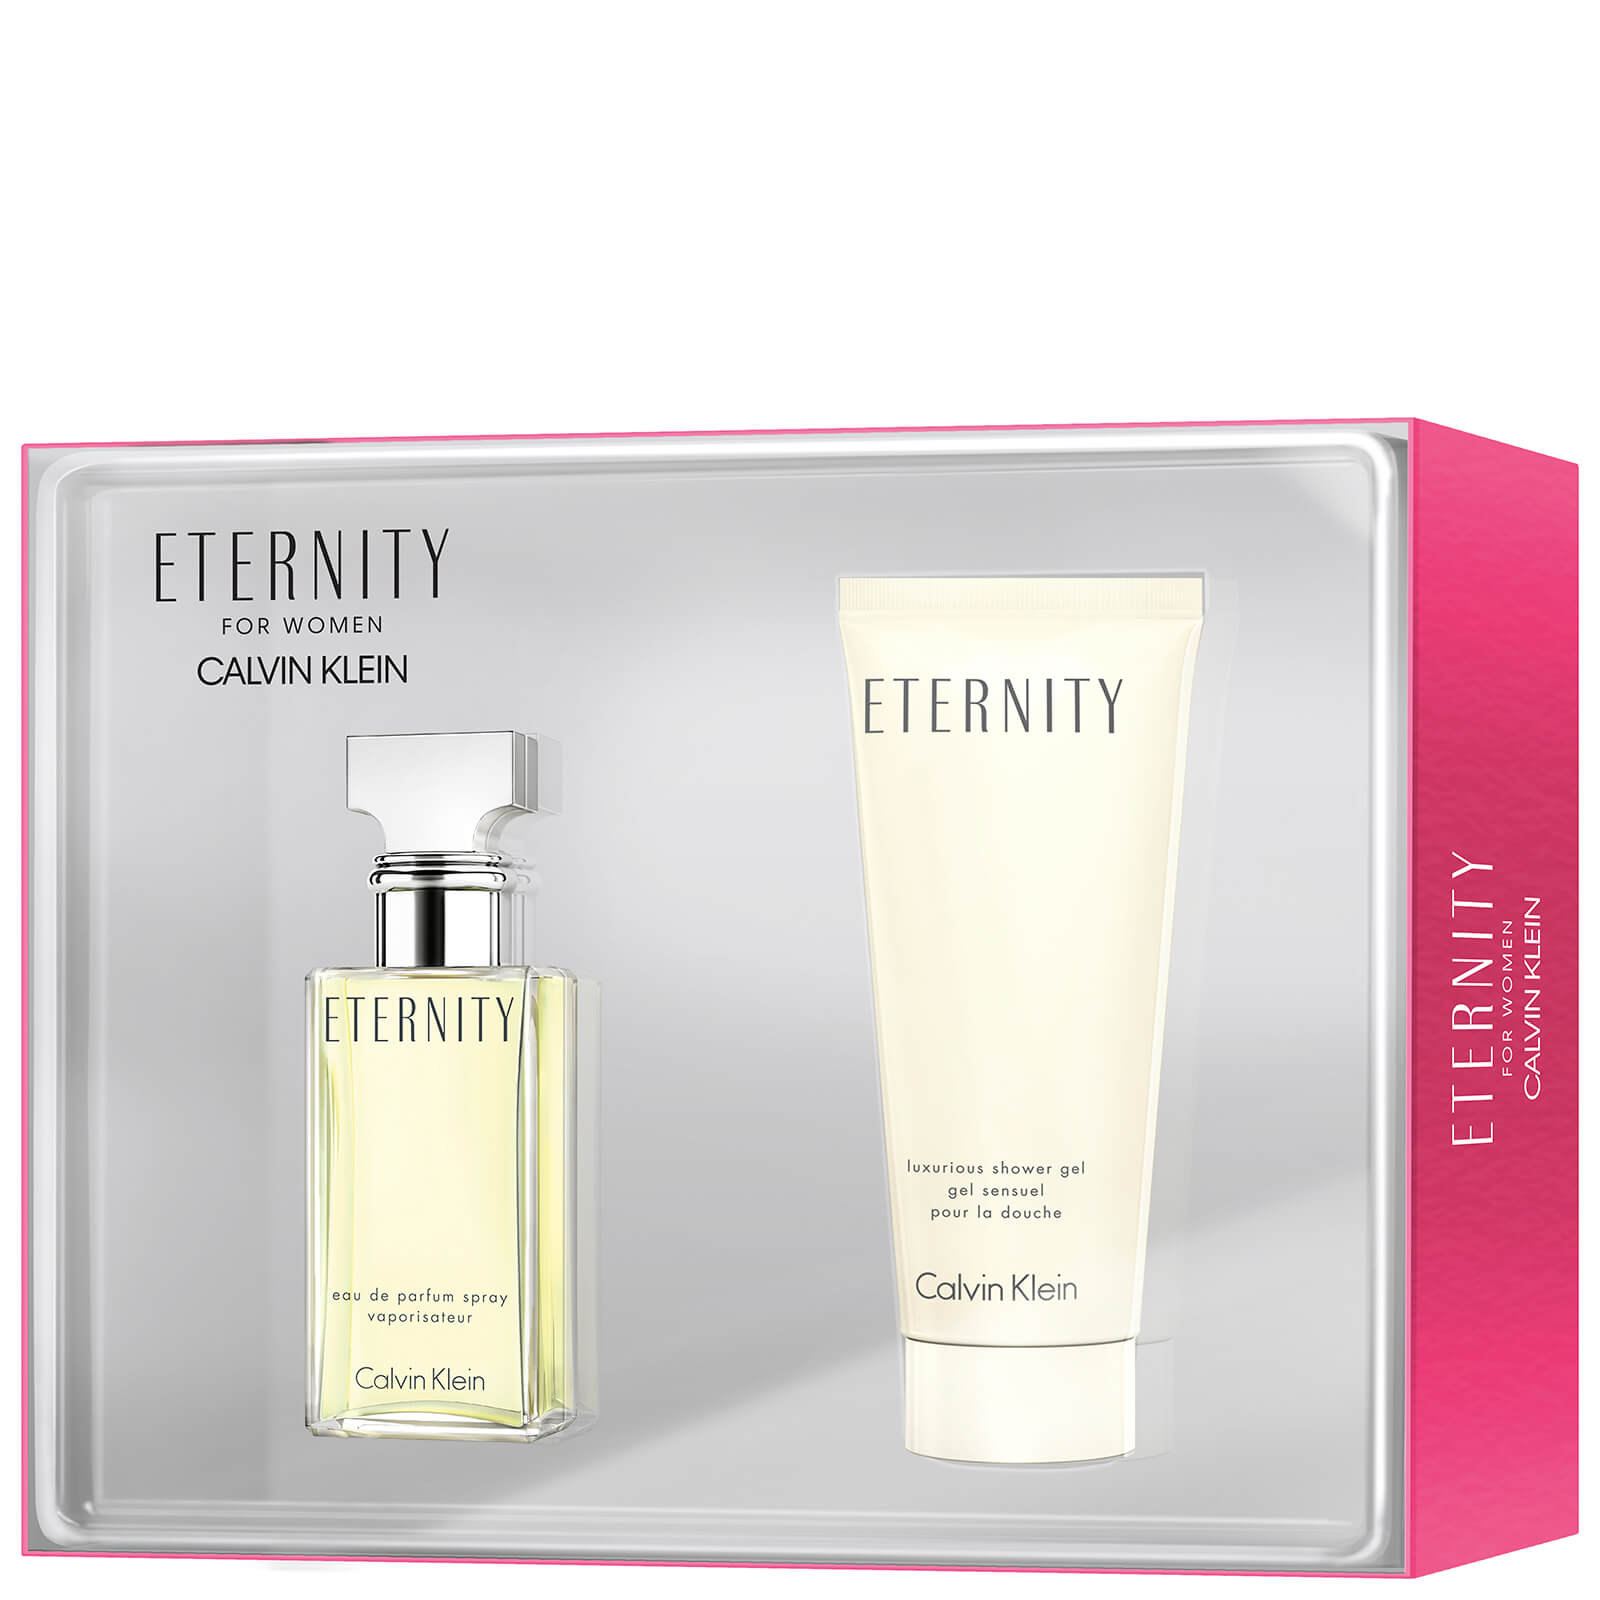 Set navideño de Eau de Parfum Eternity for Women de Calvin Klein 30 ml